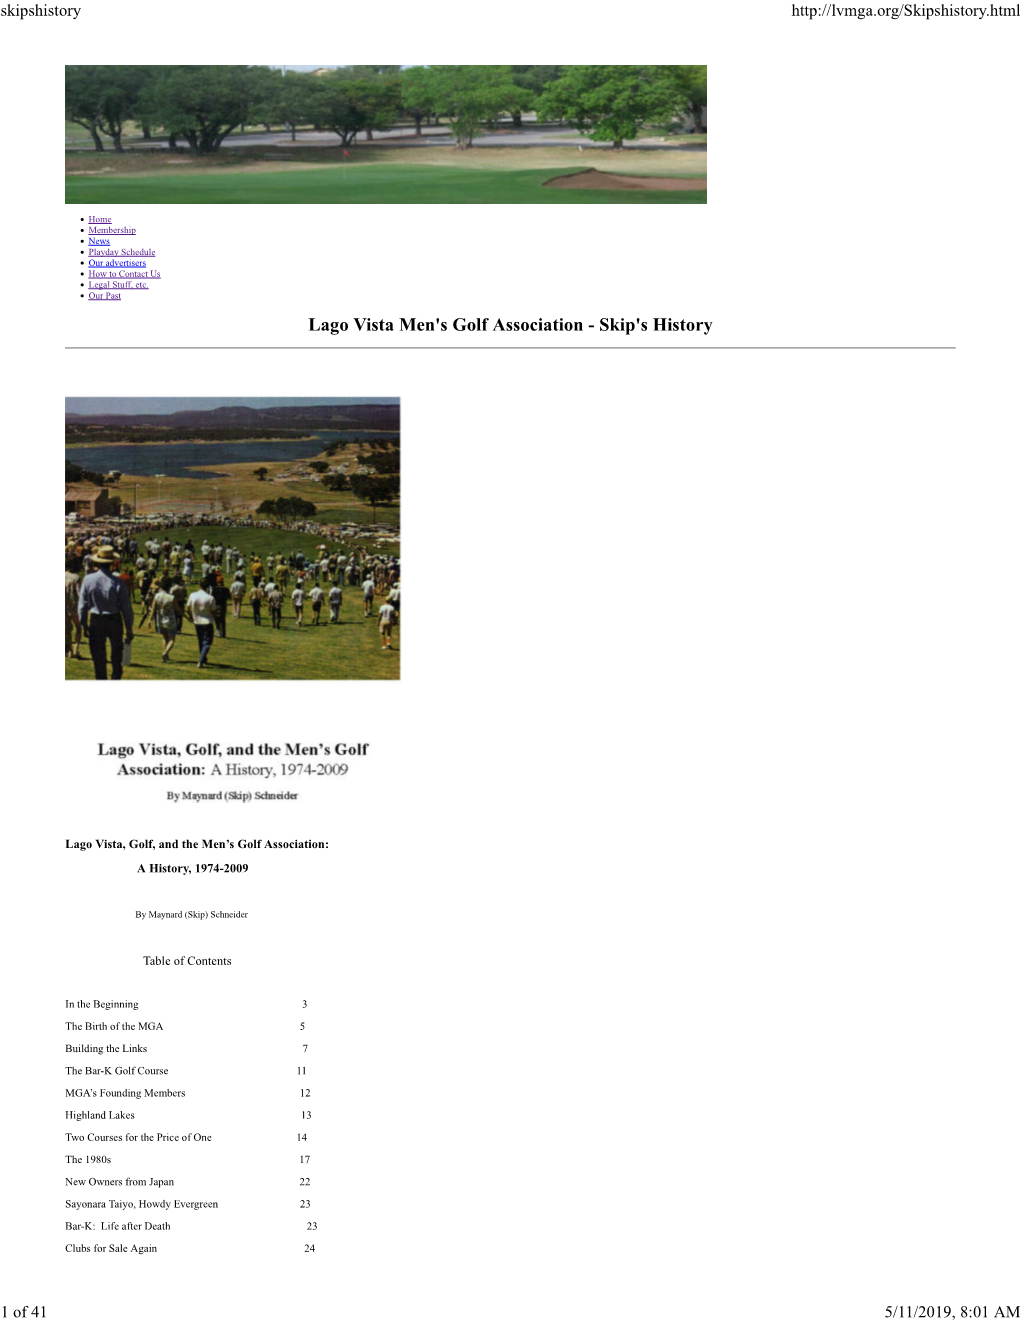 Lago Vista Men's Golf Association - Skip's History